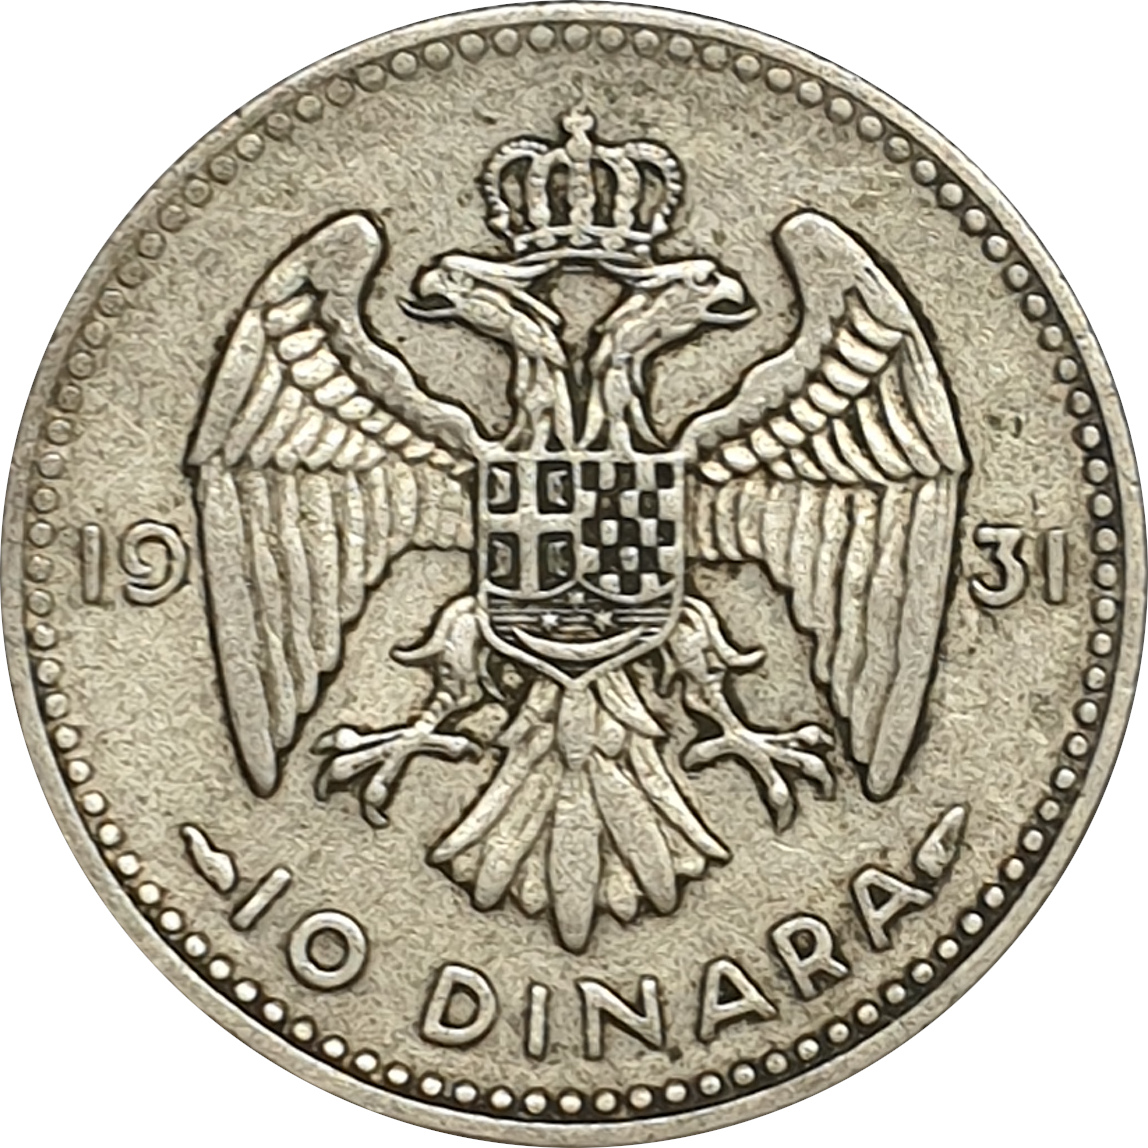 10 dinara - Young head